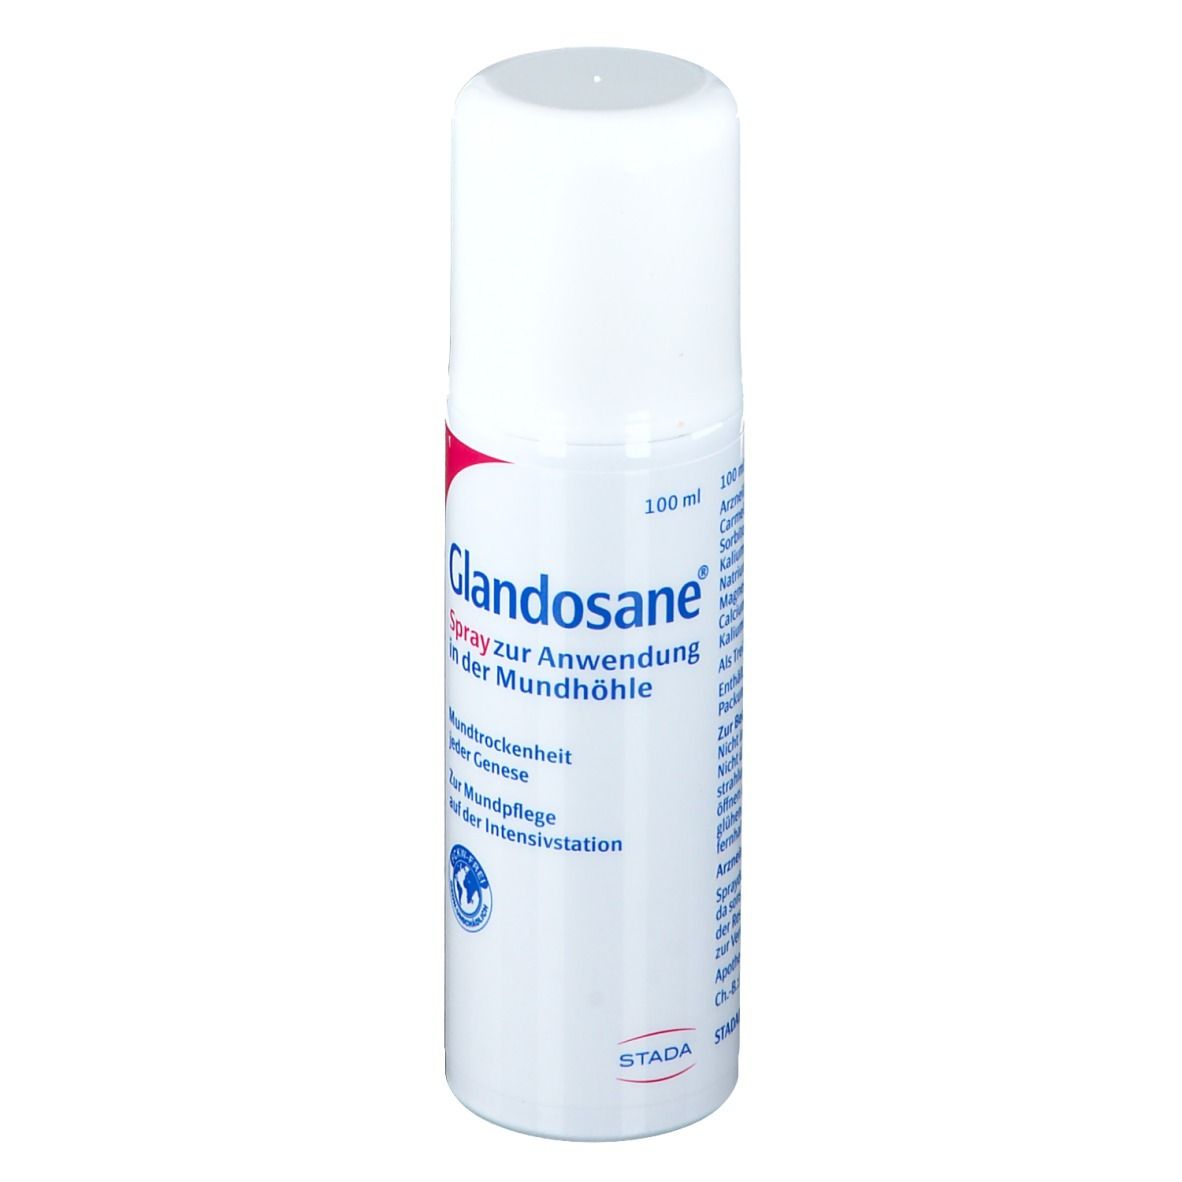 Glandosane® neutral Spraydose